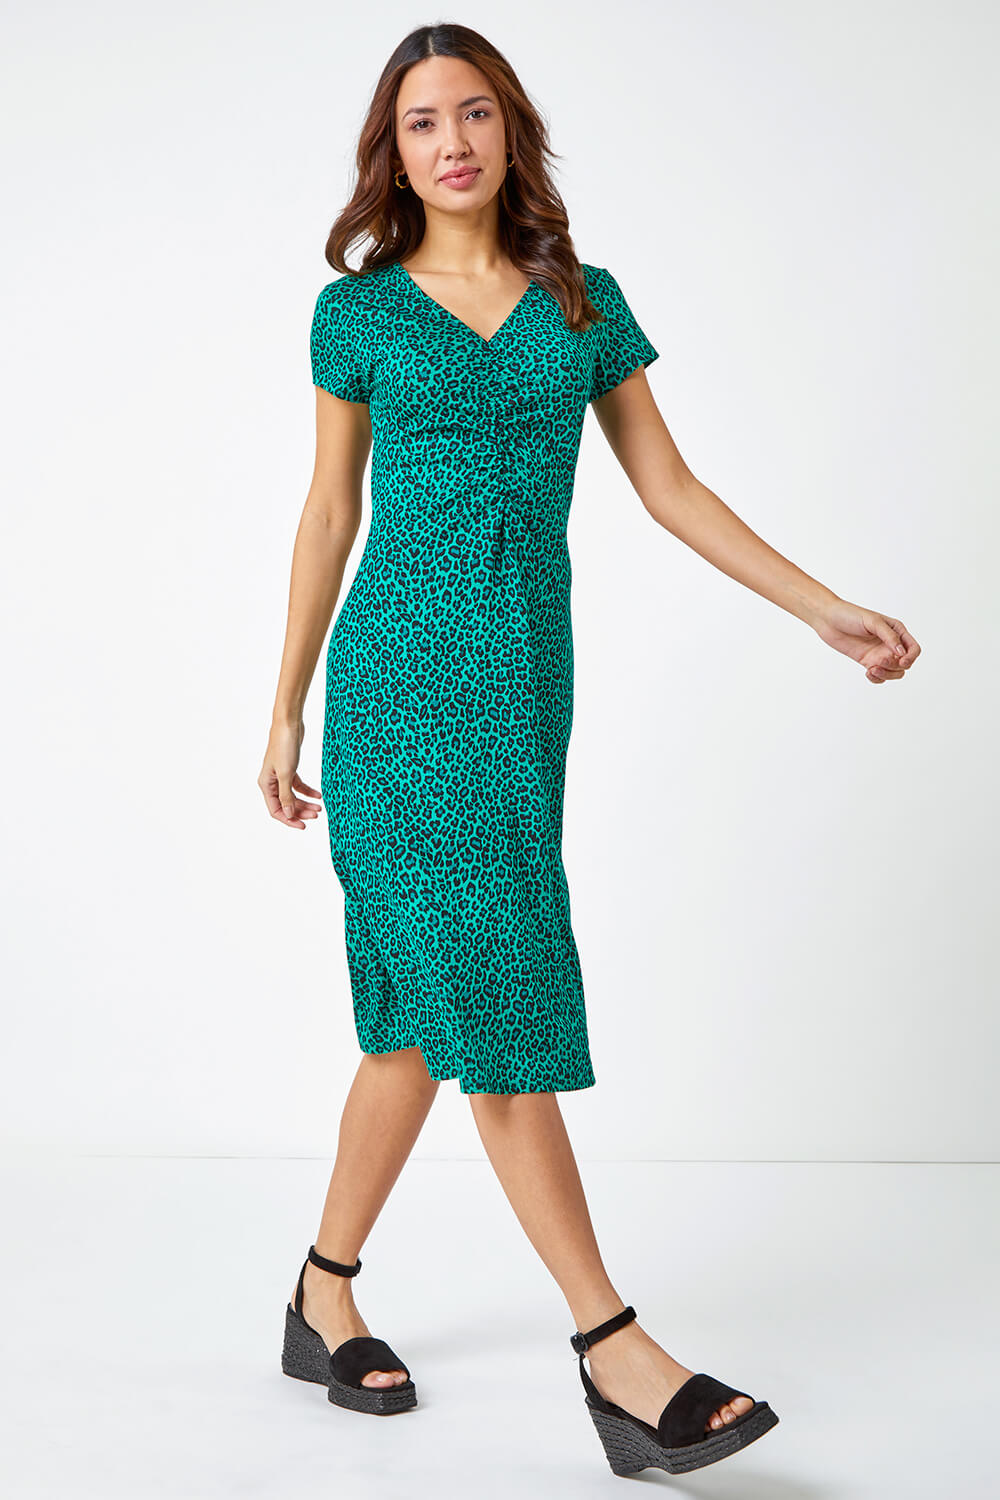 Green Leopard Print Ruched Midi Dress, Image 2 of 5